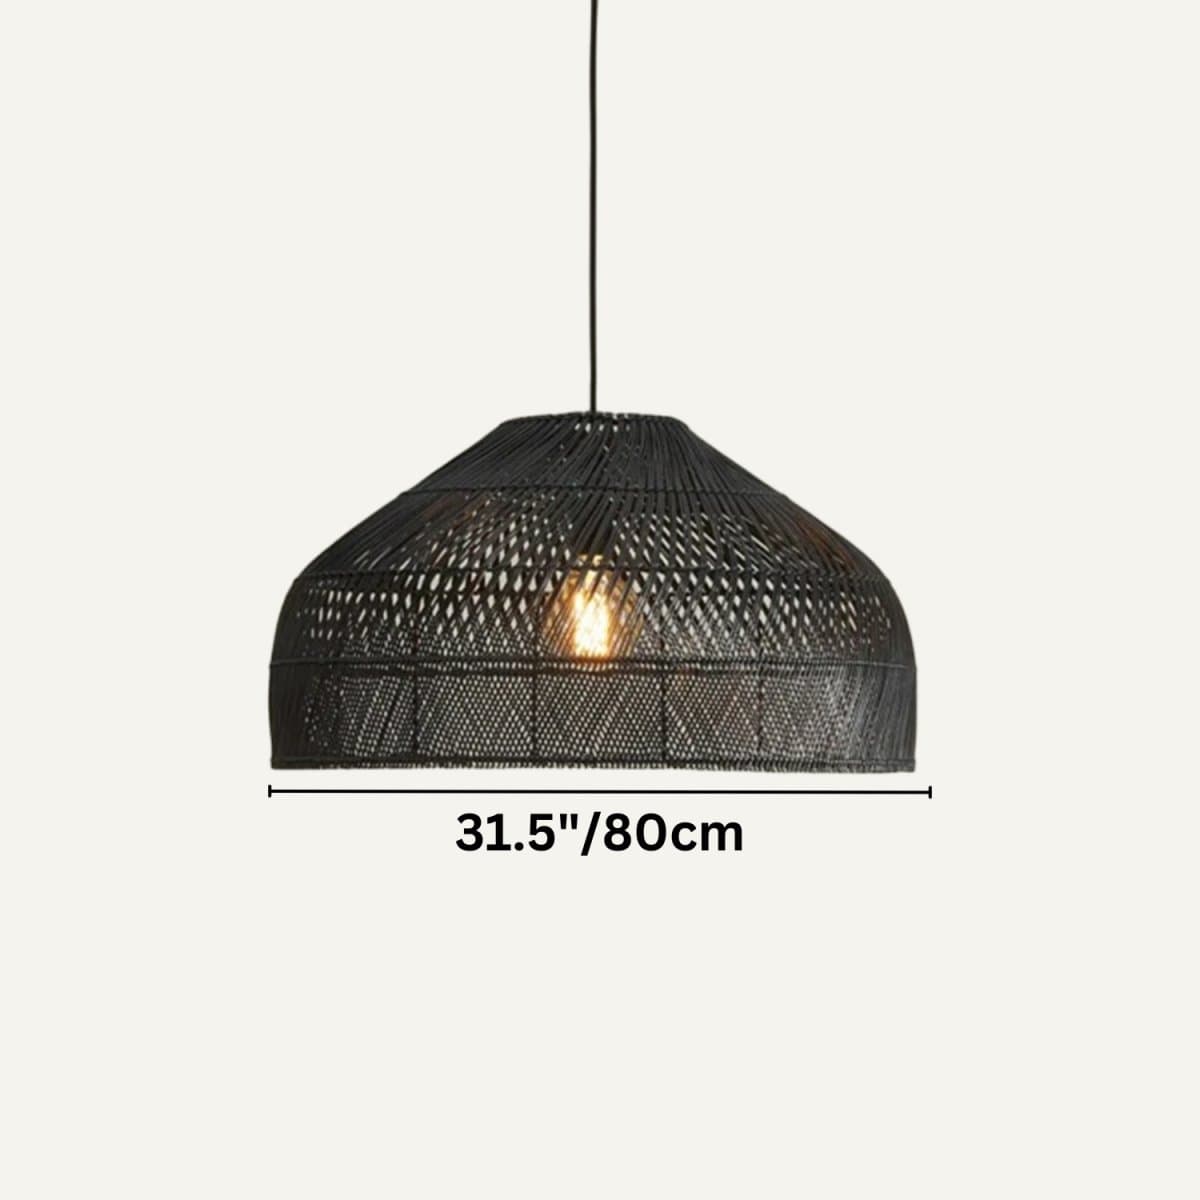 Residence Supply 31.5" / 80cm / Black Darba Pendant Light